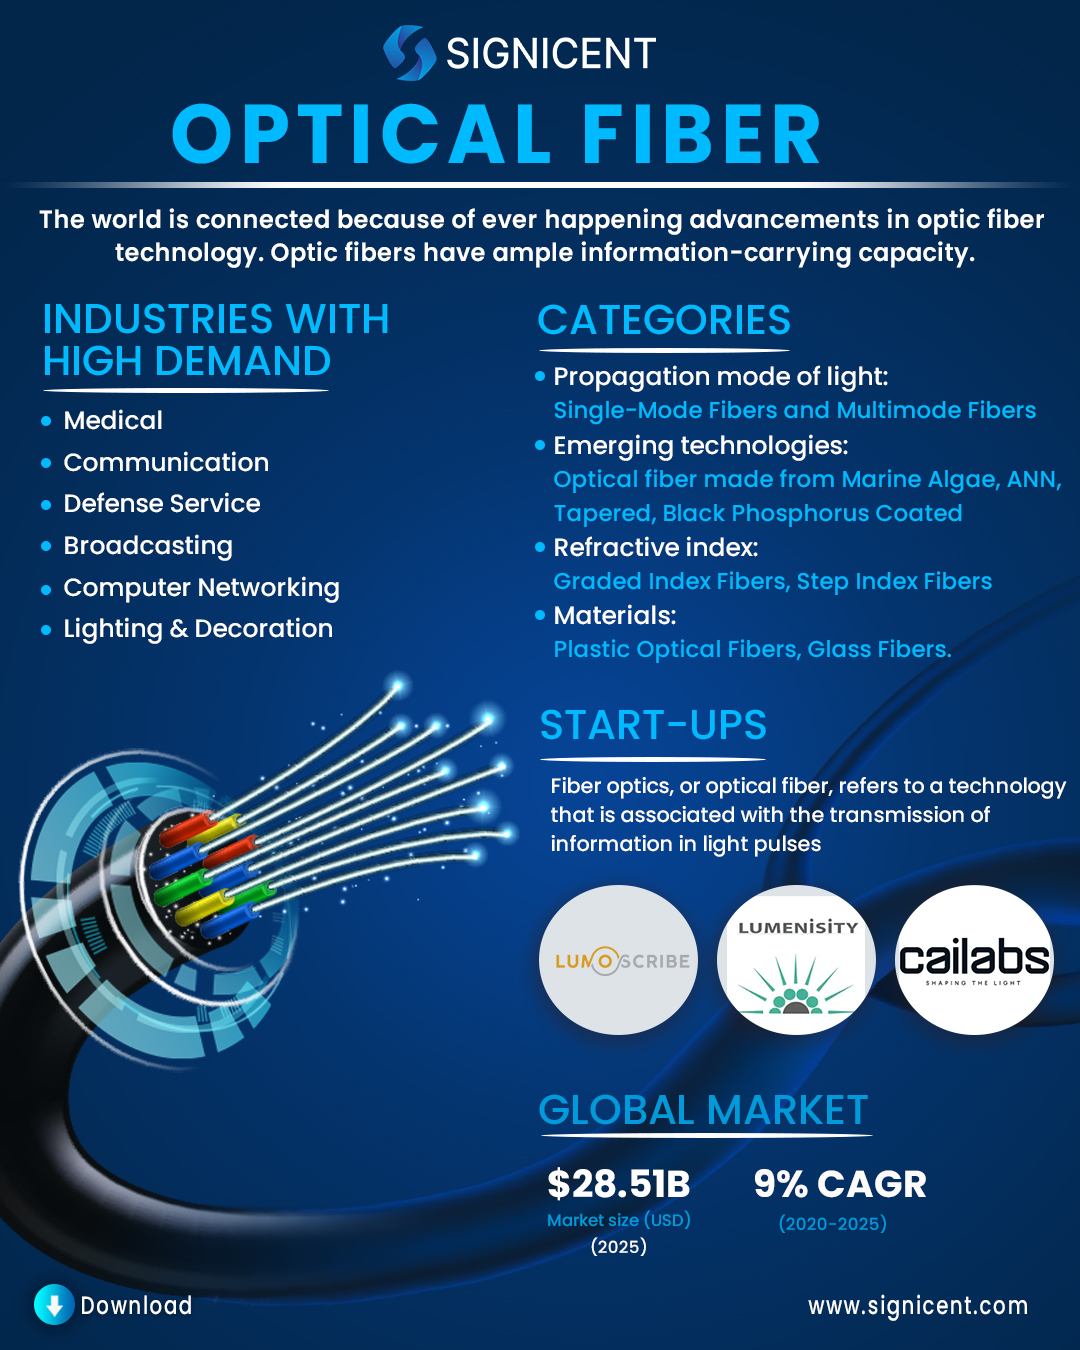 What is an optical fiber?